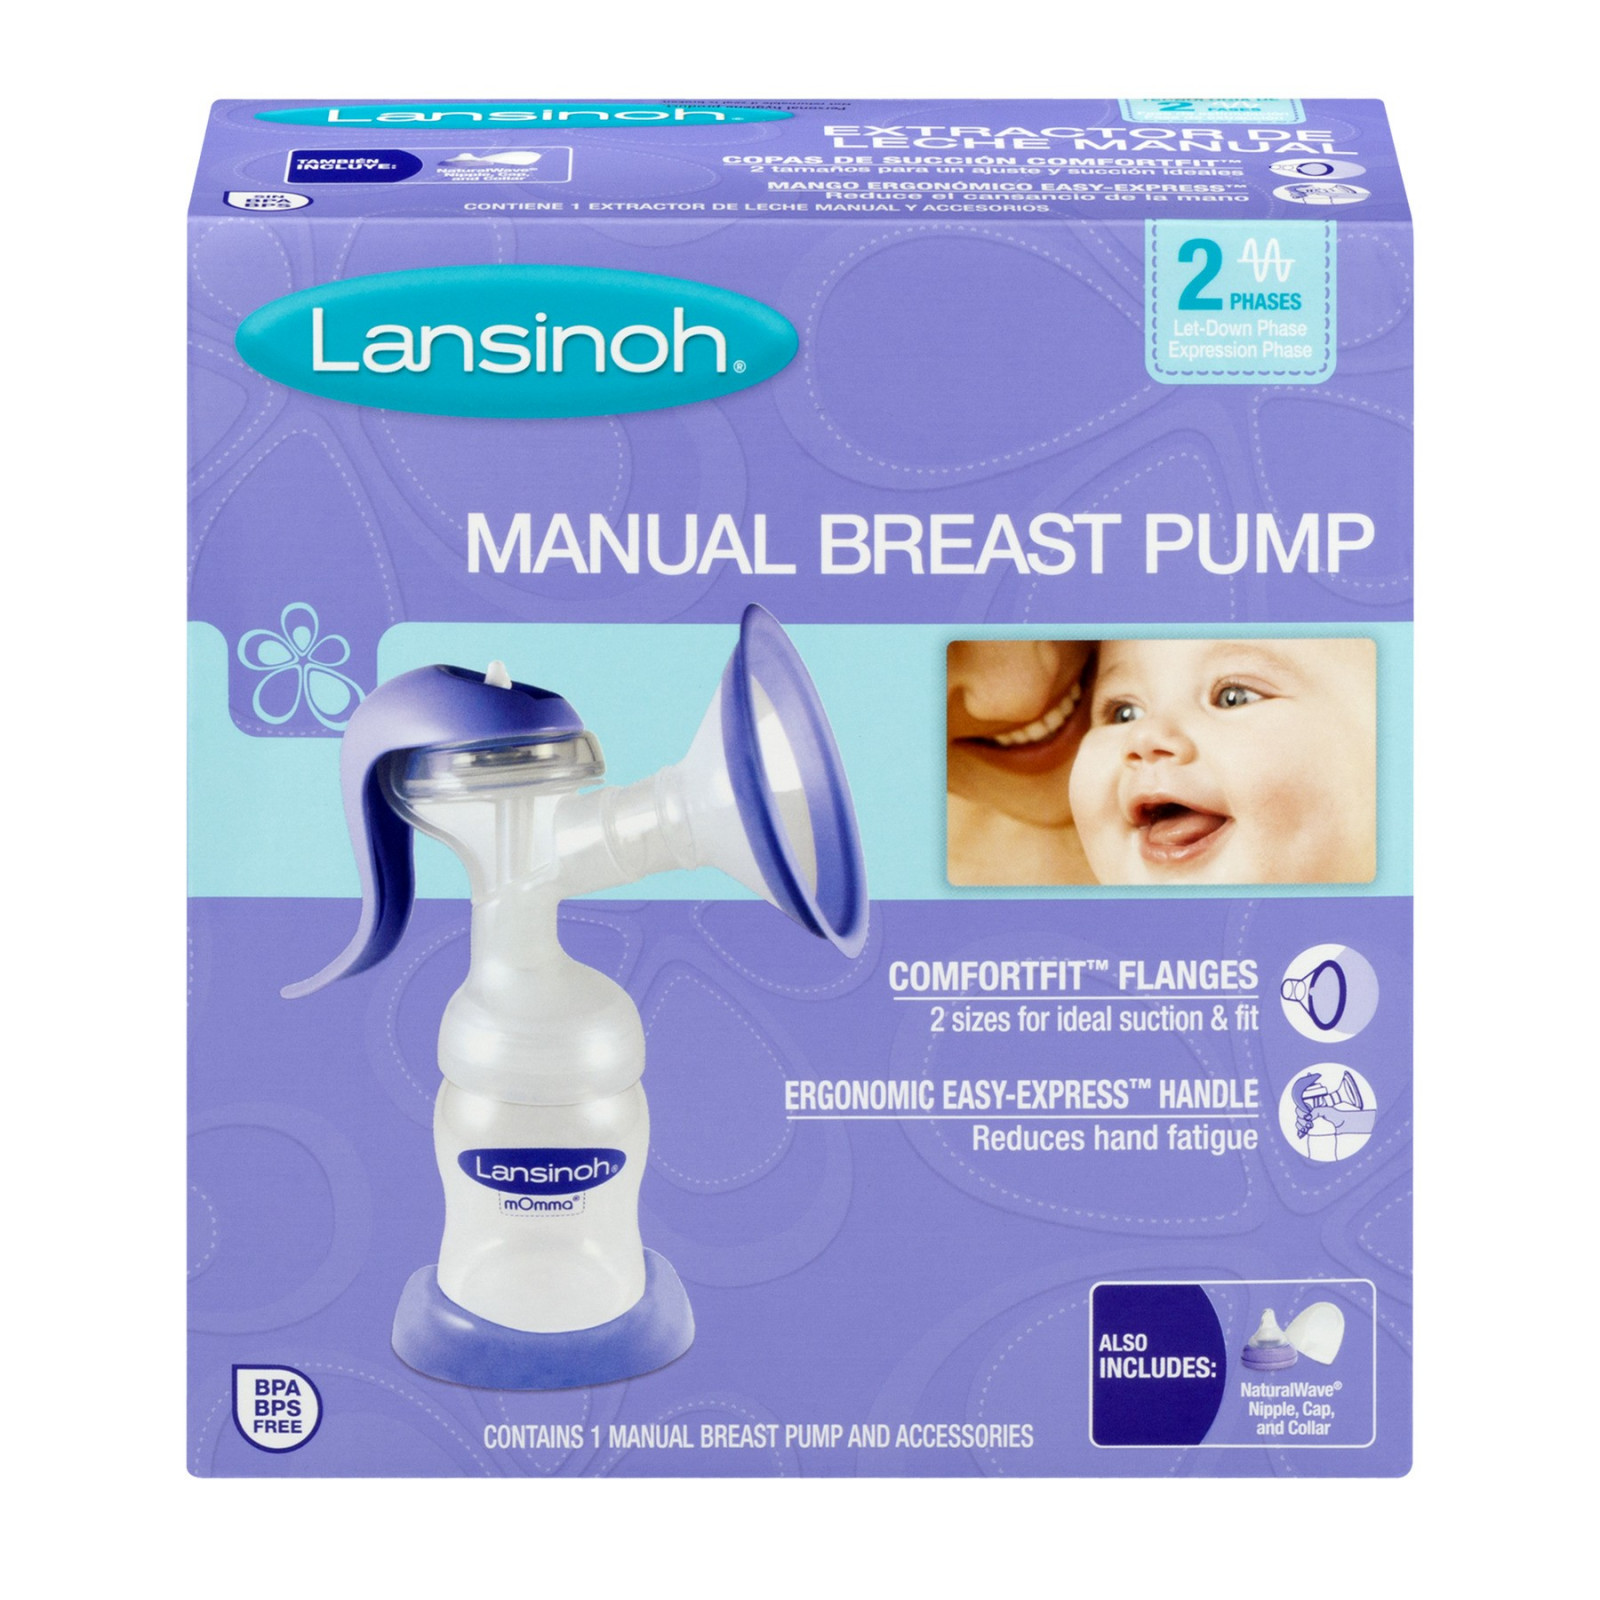 https://amedsupplies.com/1134-original/lansinoh-manual-breast-pump.jpg